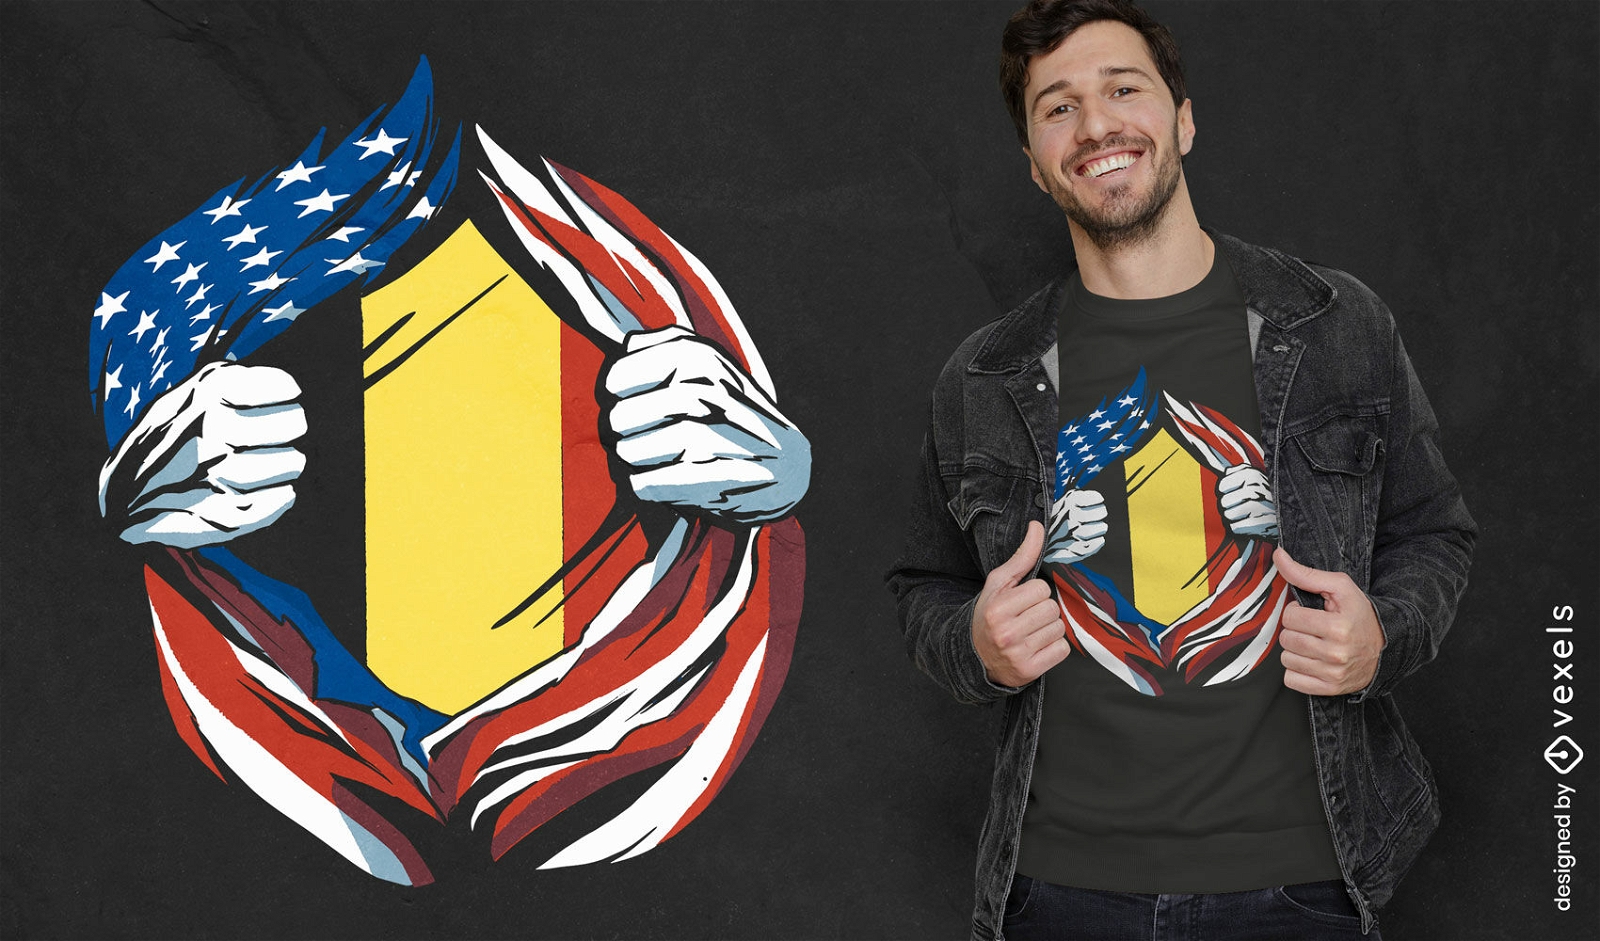 American and Belgium flag t-shirt design